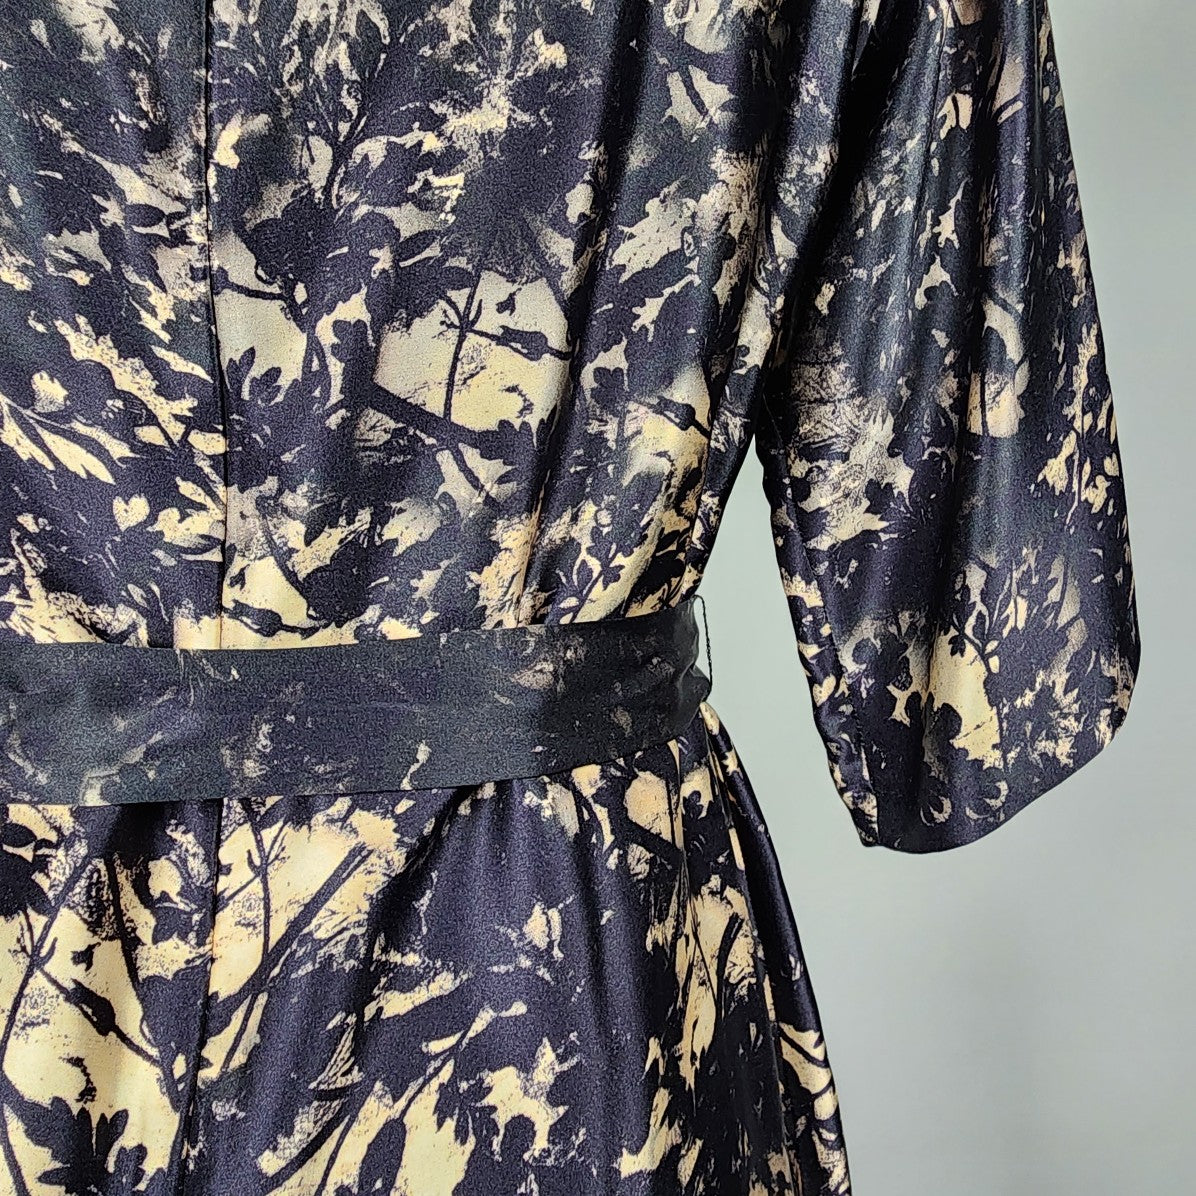 Hugo Boss Black Tropical Print Belted Silk Dress Size 8